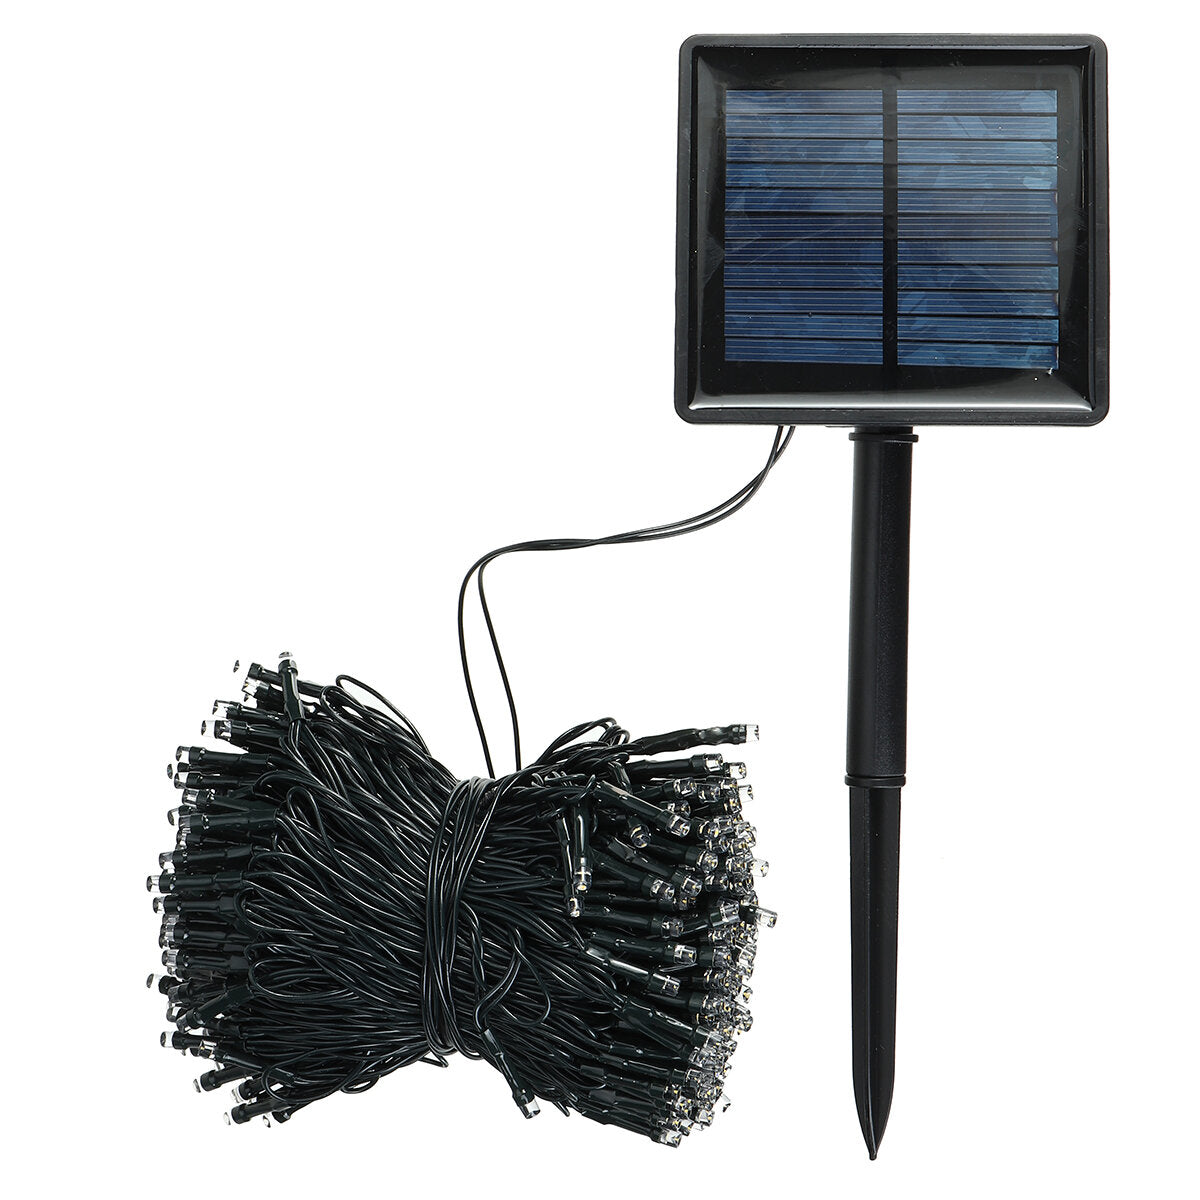 100/200/300 led solar string fairy lights koperdraad outdoor garden waterproof